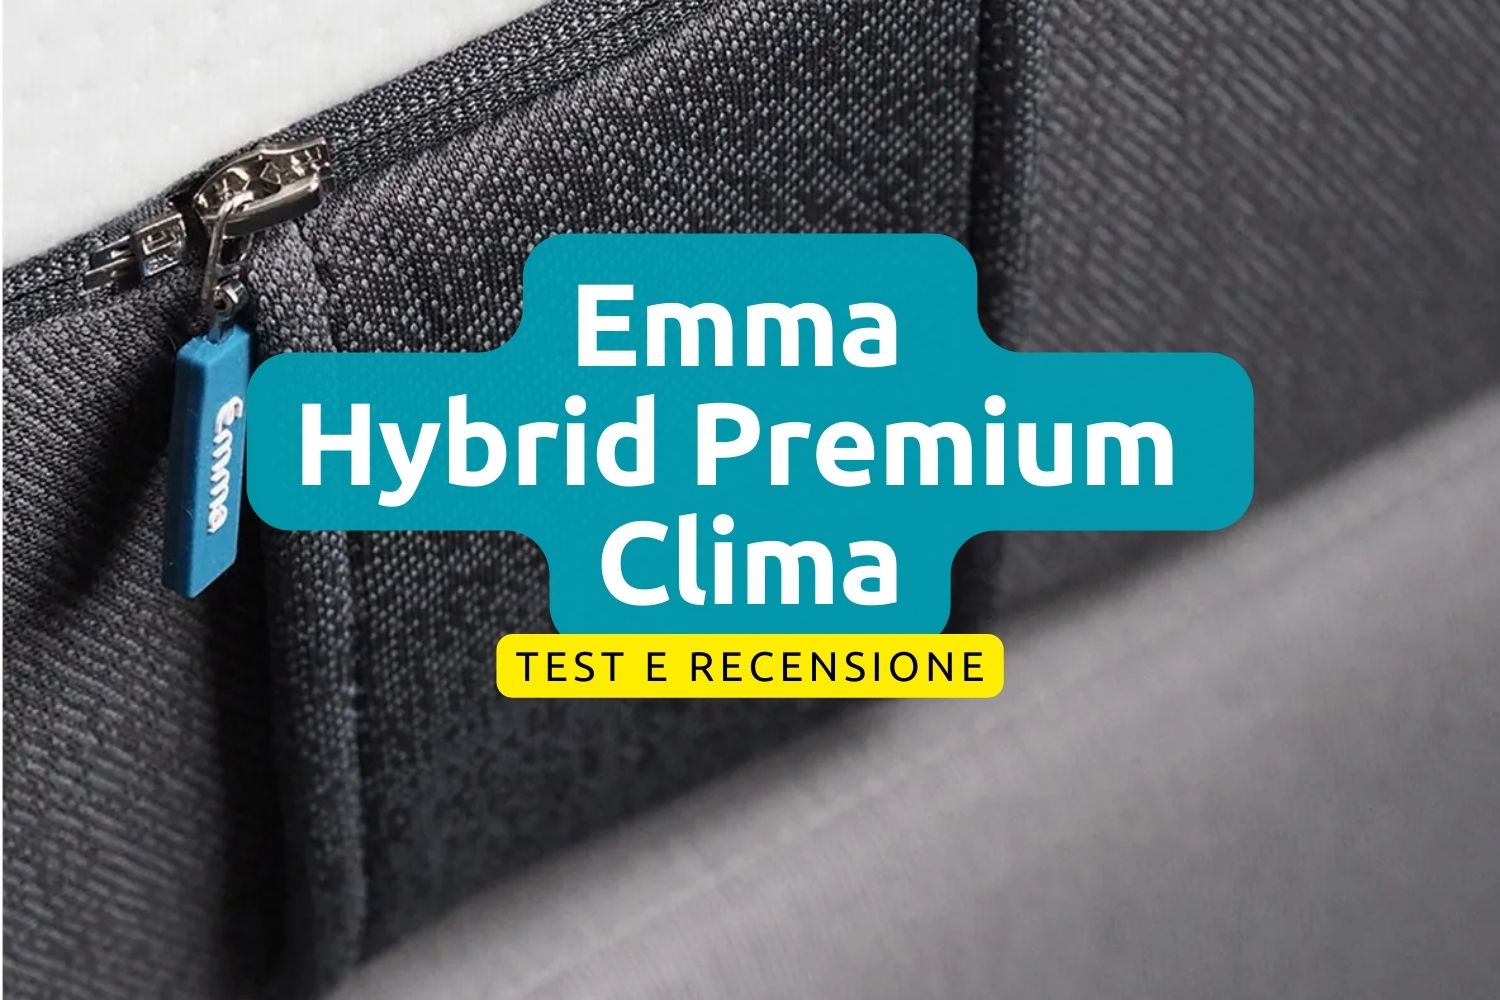 Emma Hybrid Premium Clima